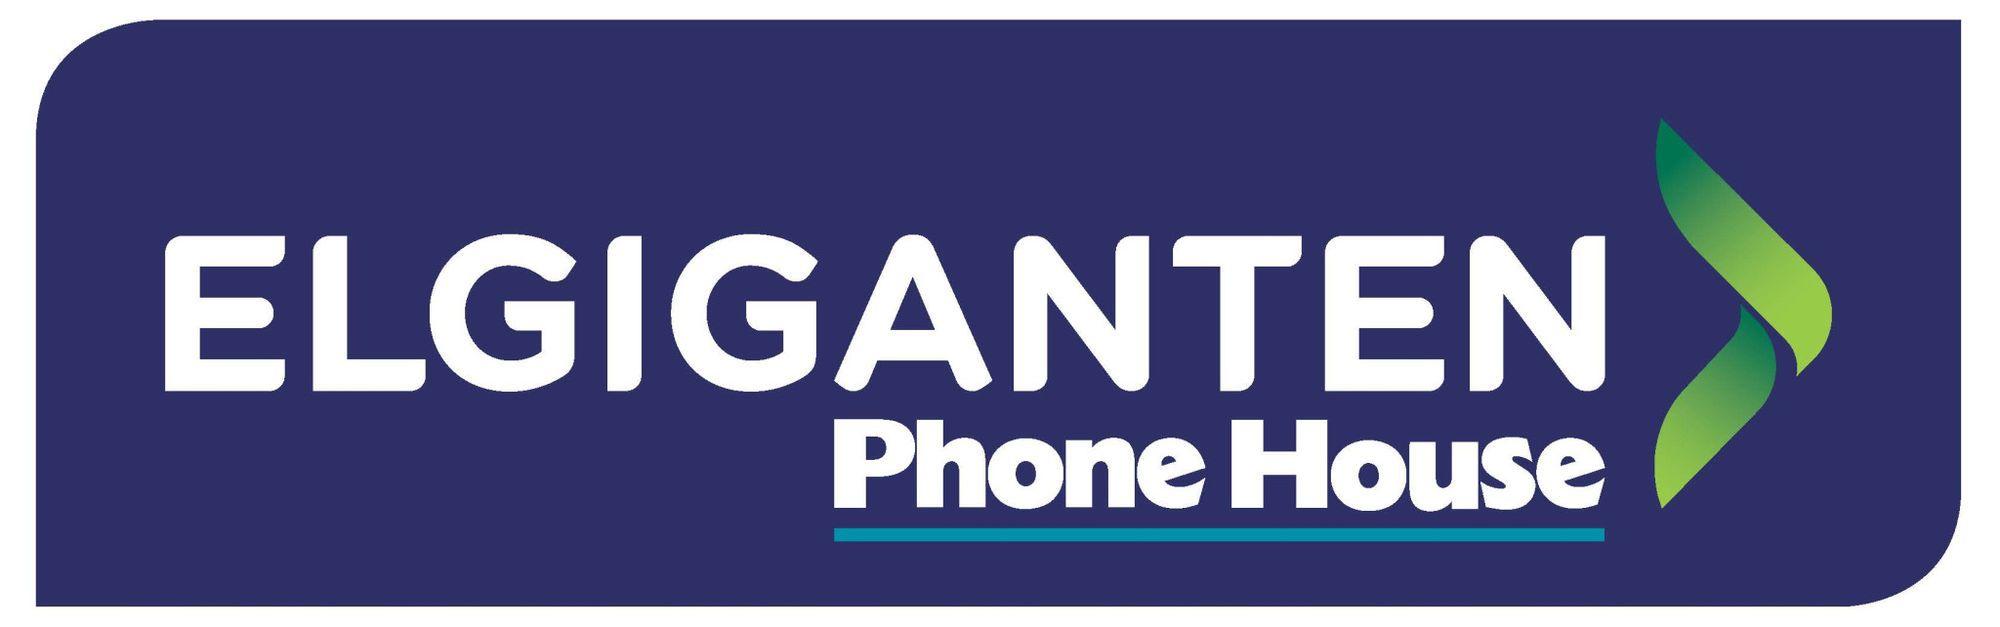 House Phone Logo - Phone House